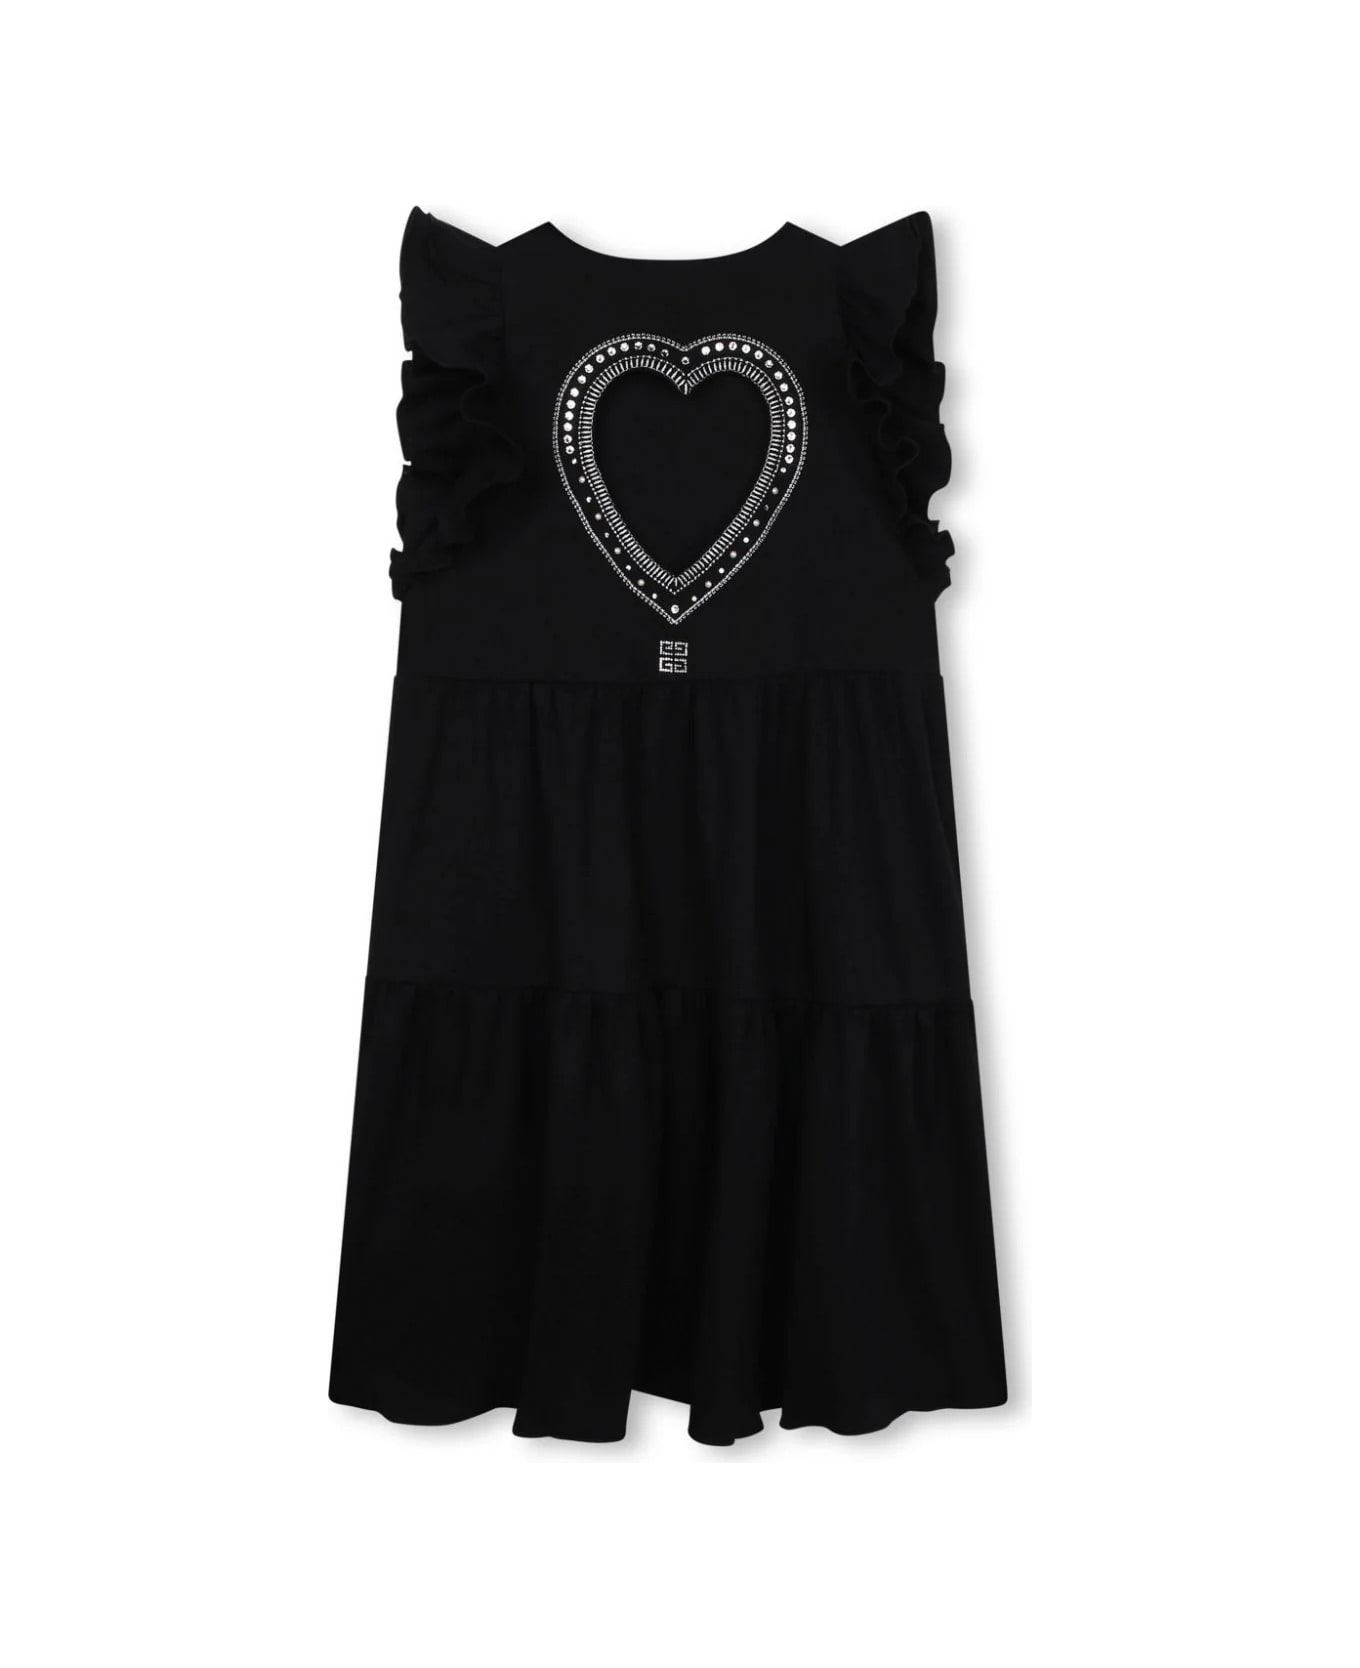 Givenchy Black Sleeveless Dress With Rhinestone Logo - Black